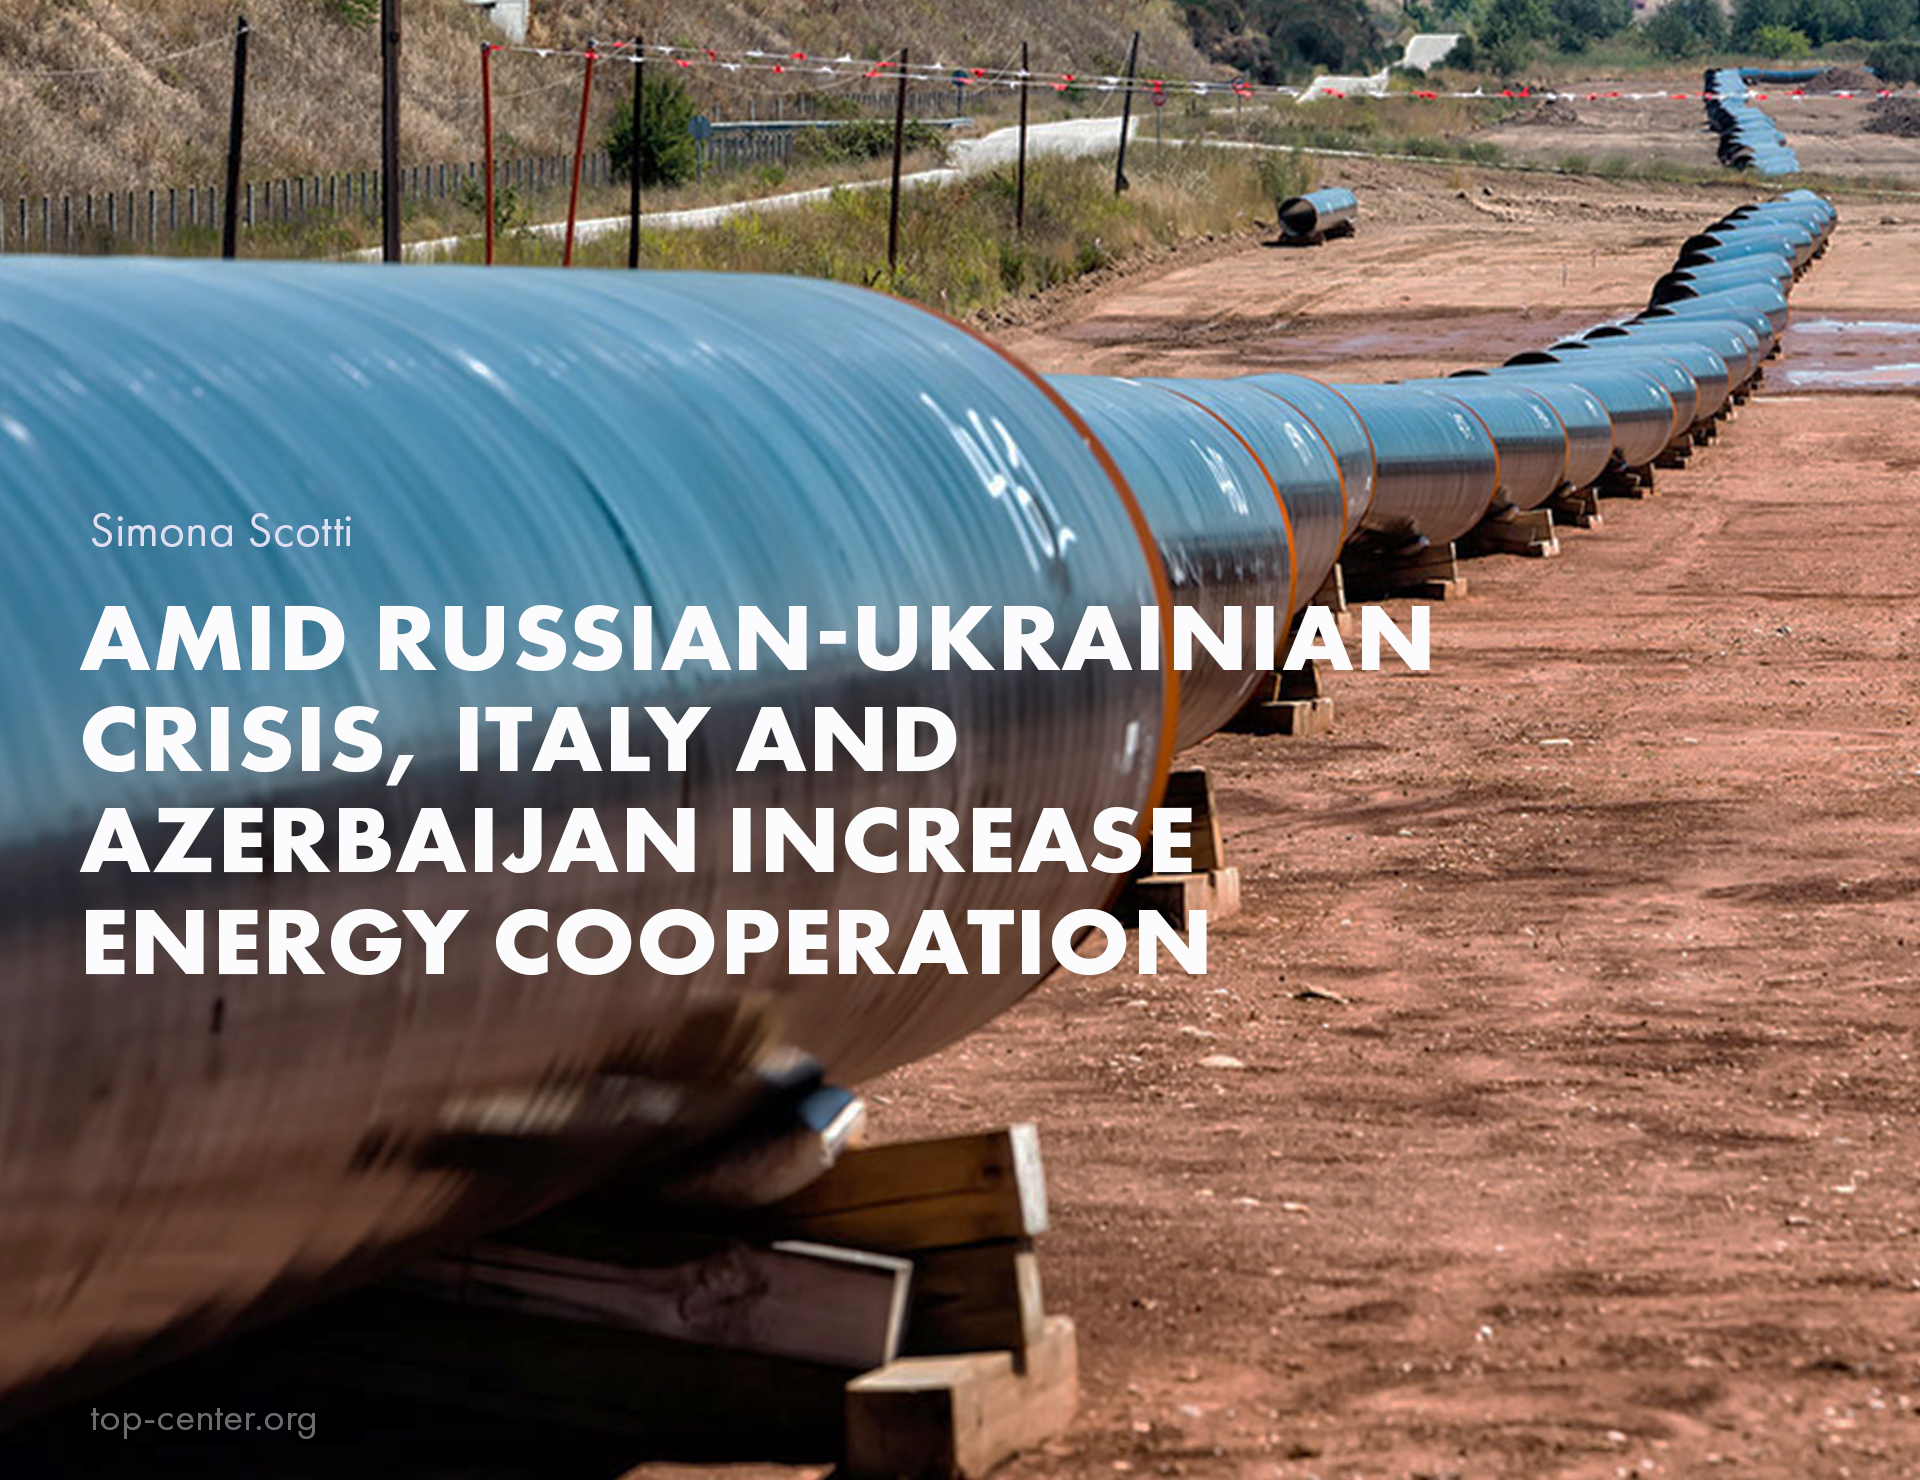 Amid Russian-Ukrainian crisis, Italy and Azerbaijan increase energy cooperation